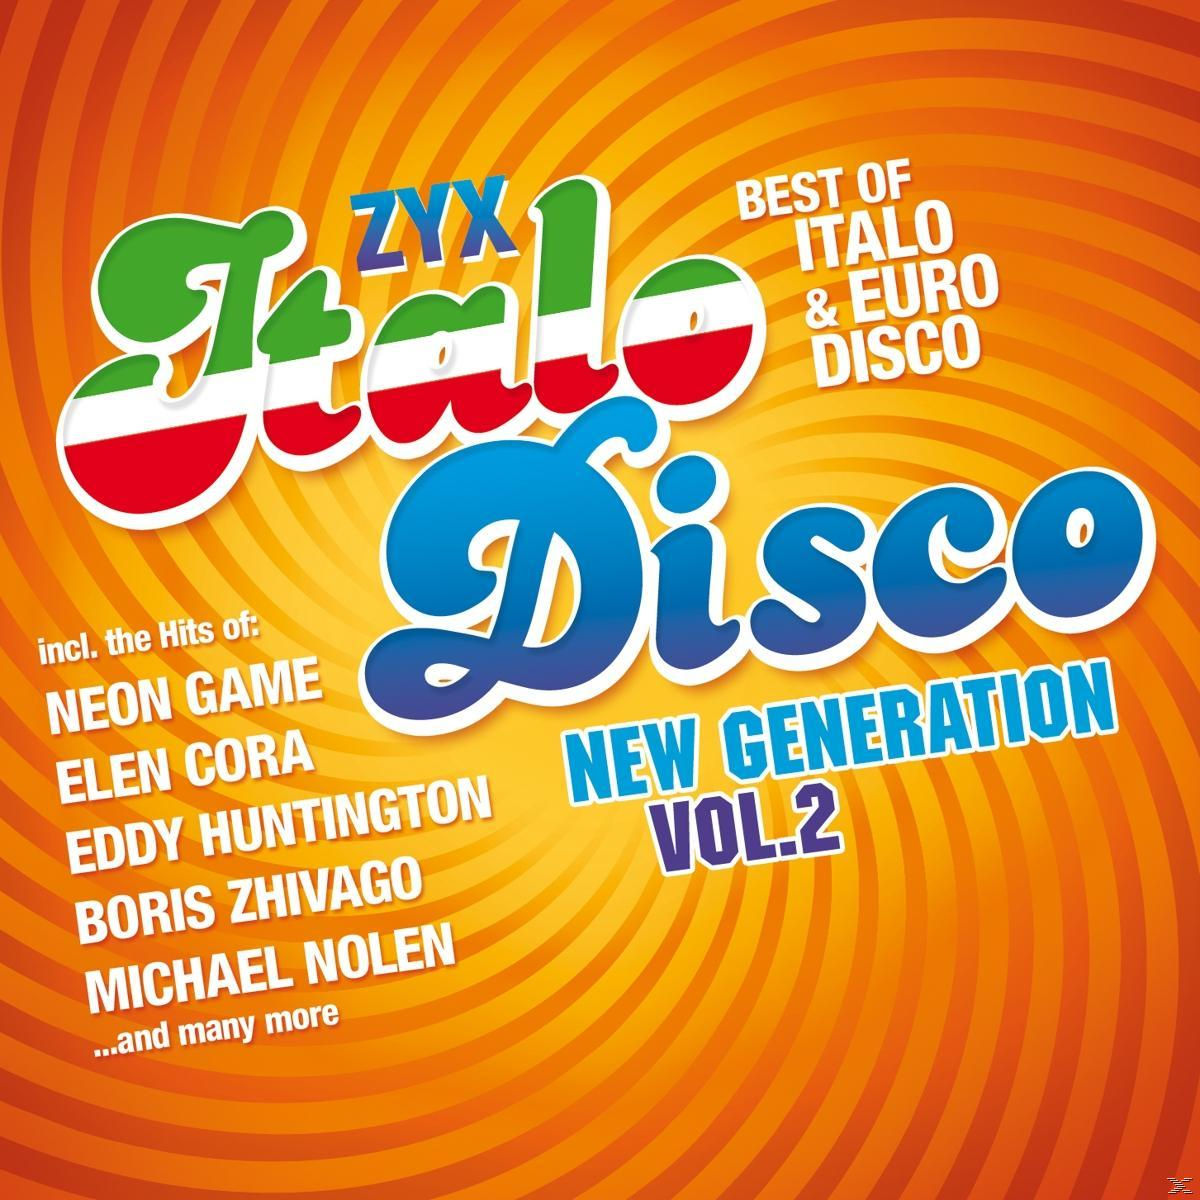 VARIOUS - Zyx - Generation Vol.2 New (CD) Italo Disco